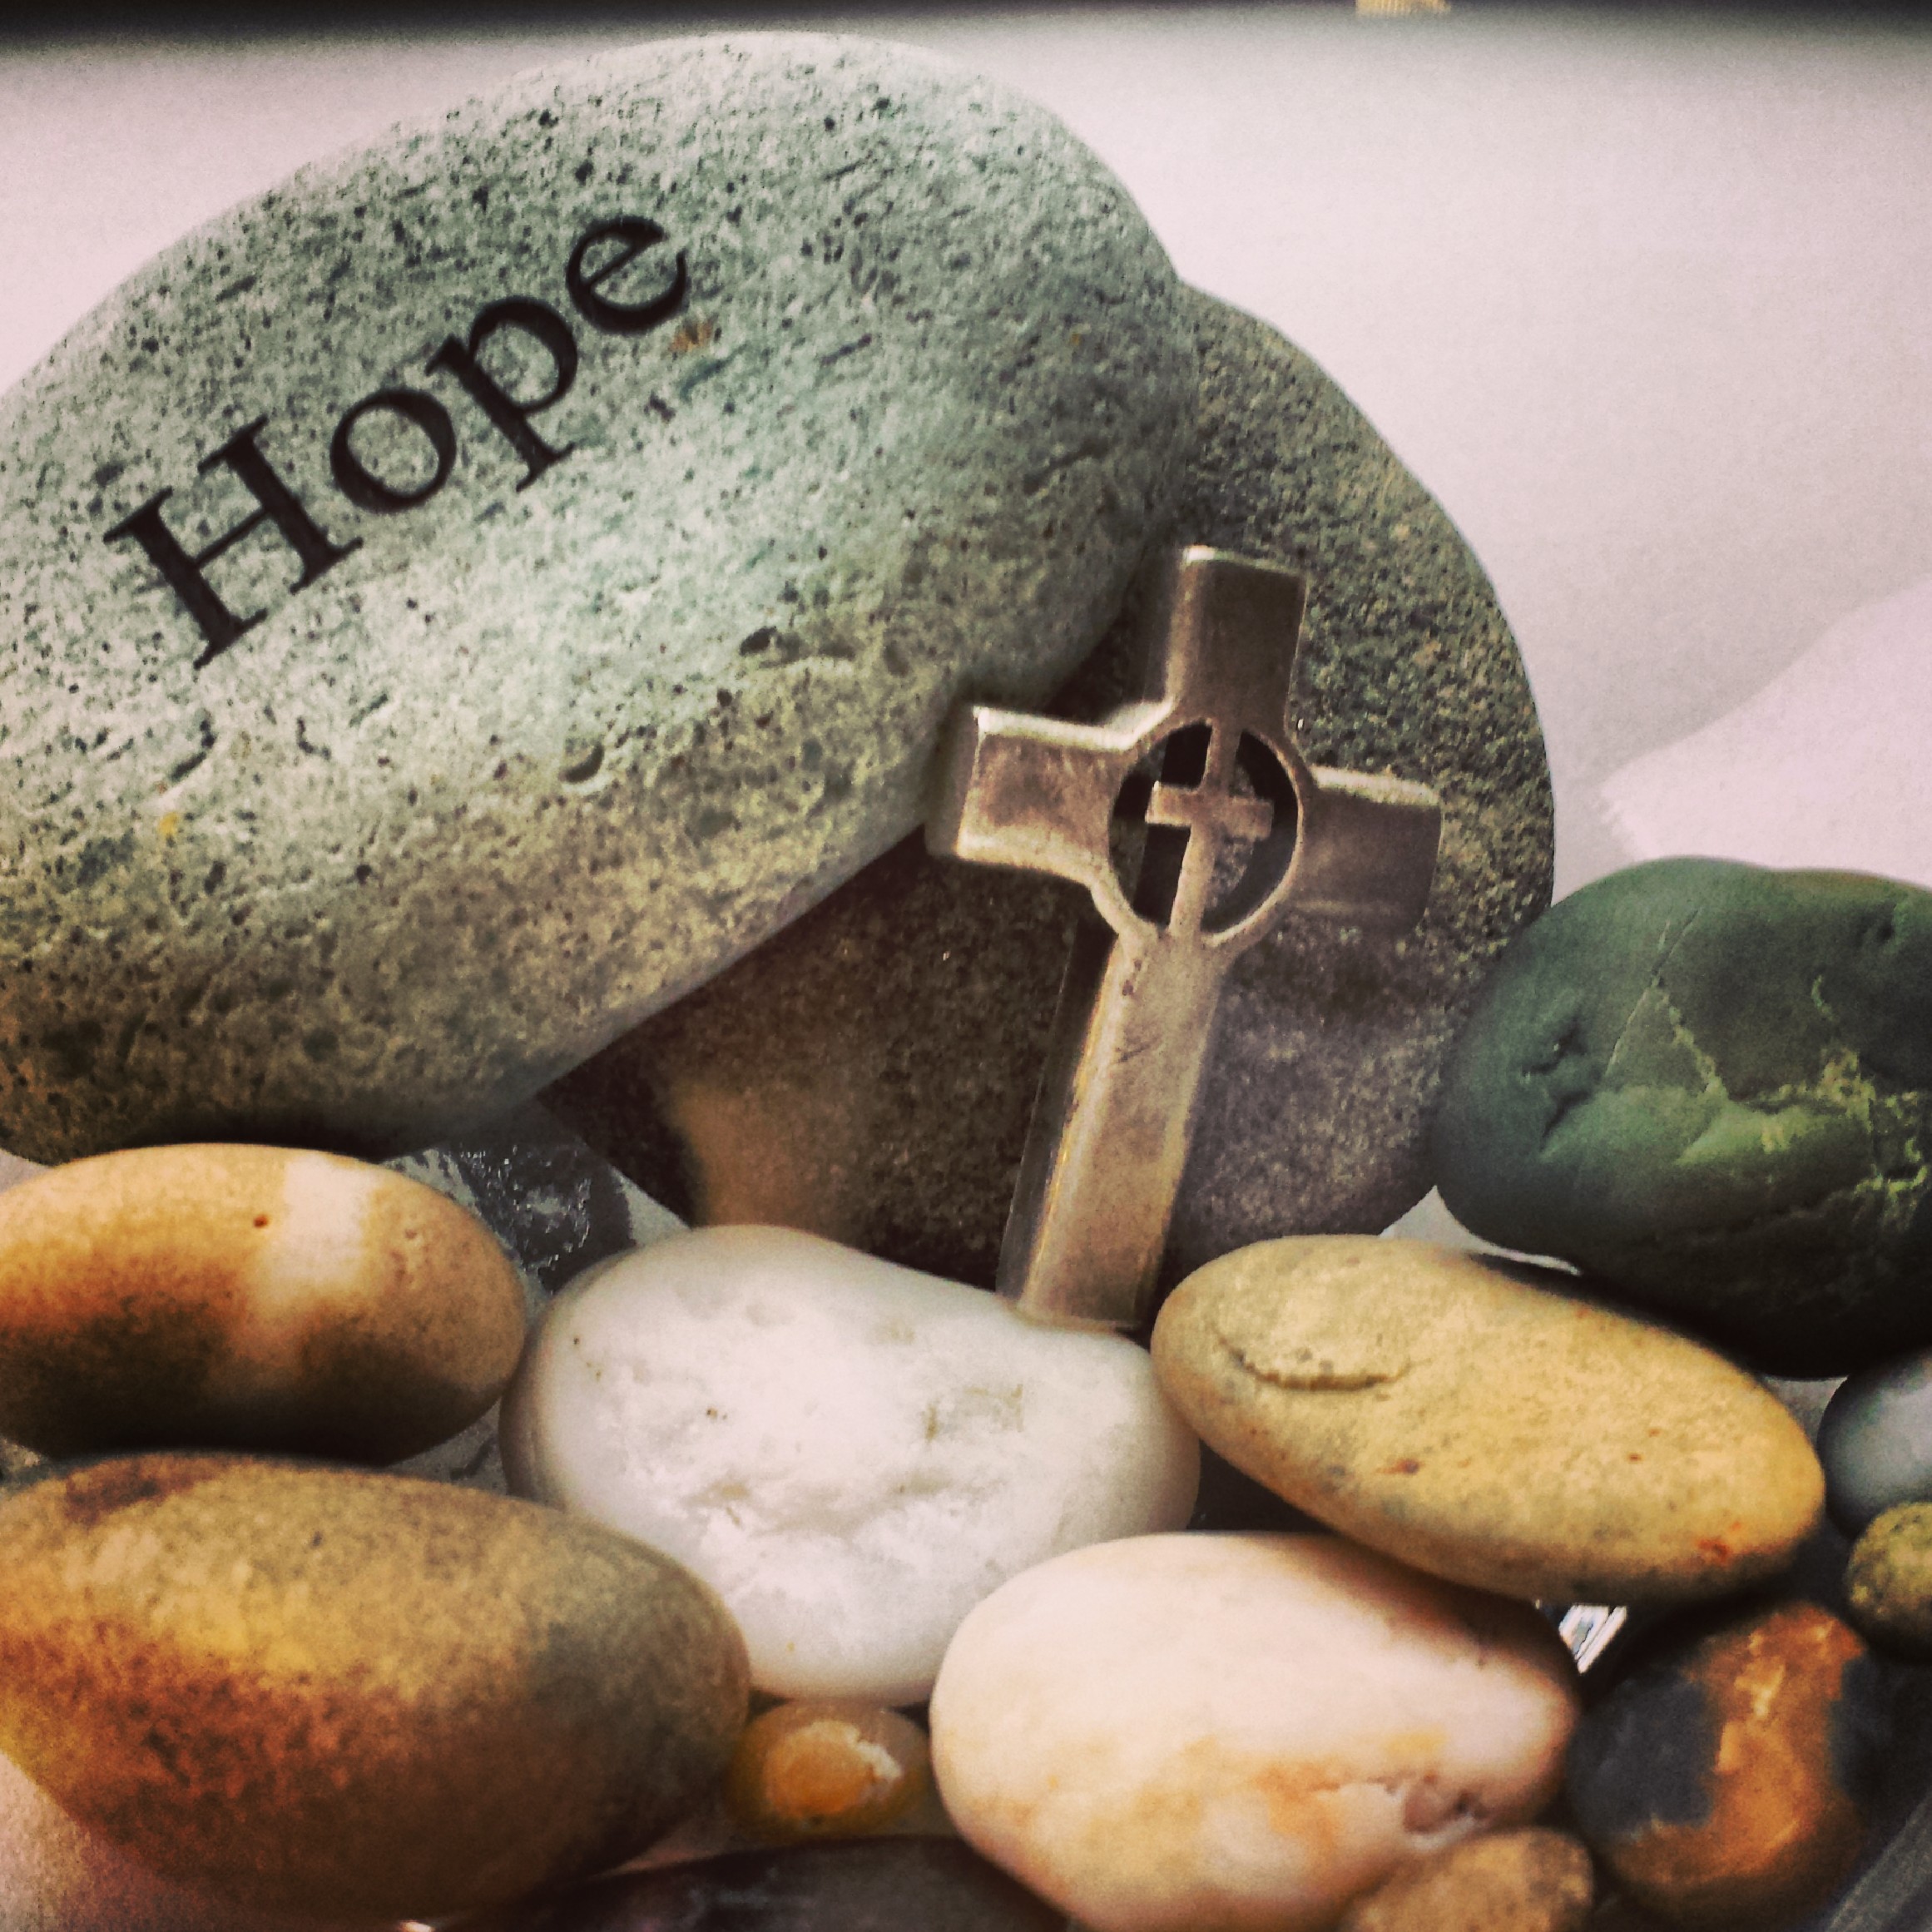 "Hold onto Hope"  Photograph - Mark Schutter 2014